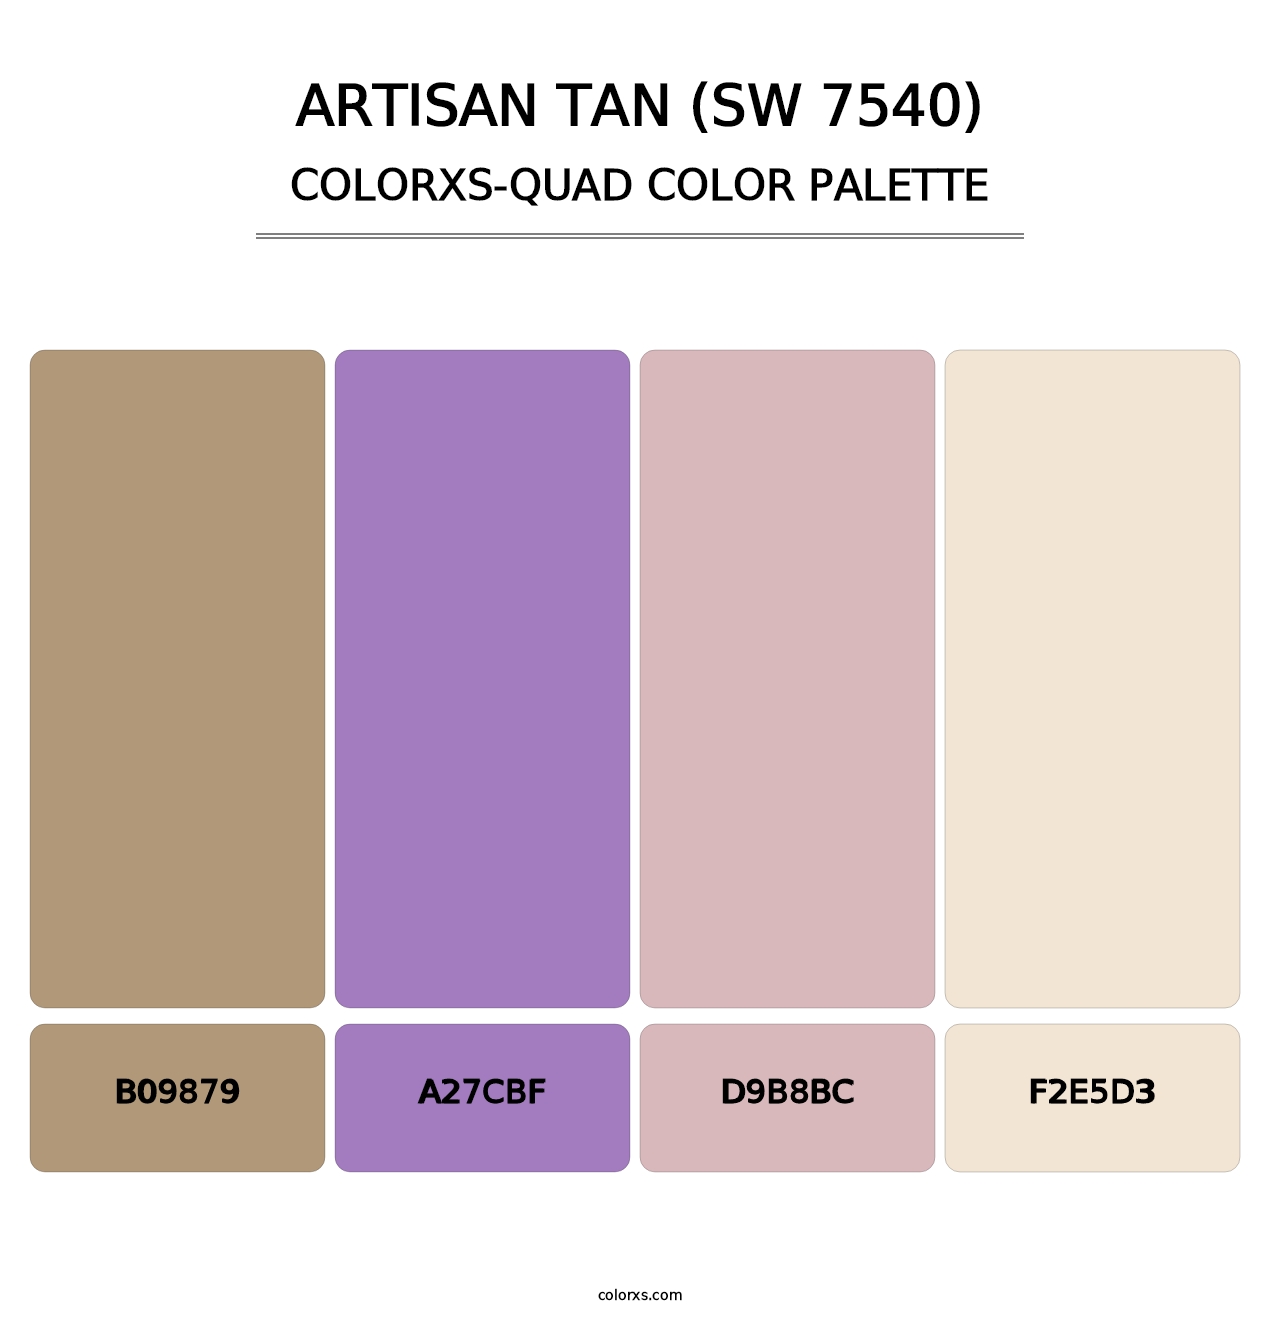 Artisan Tan (SW 7540) - Colorxs Quad Palette